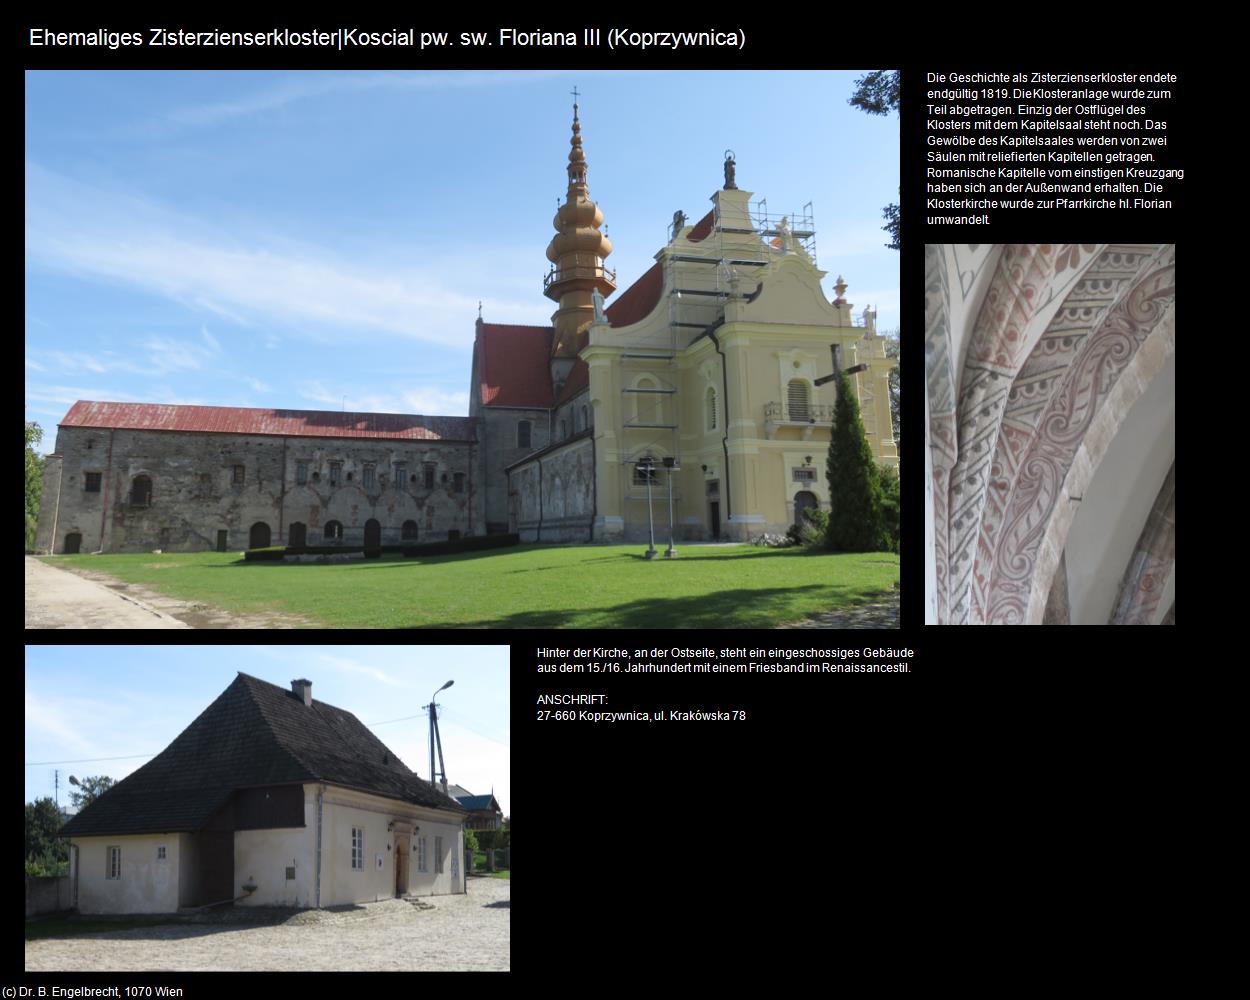 Ehem. Zisterzienserkloster III (Koprzywnica) in POLEN-Galizien